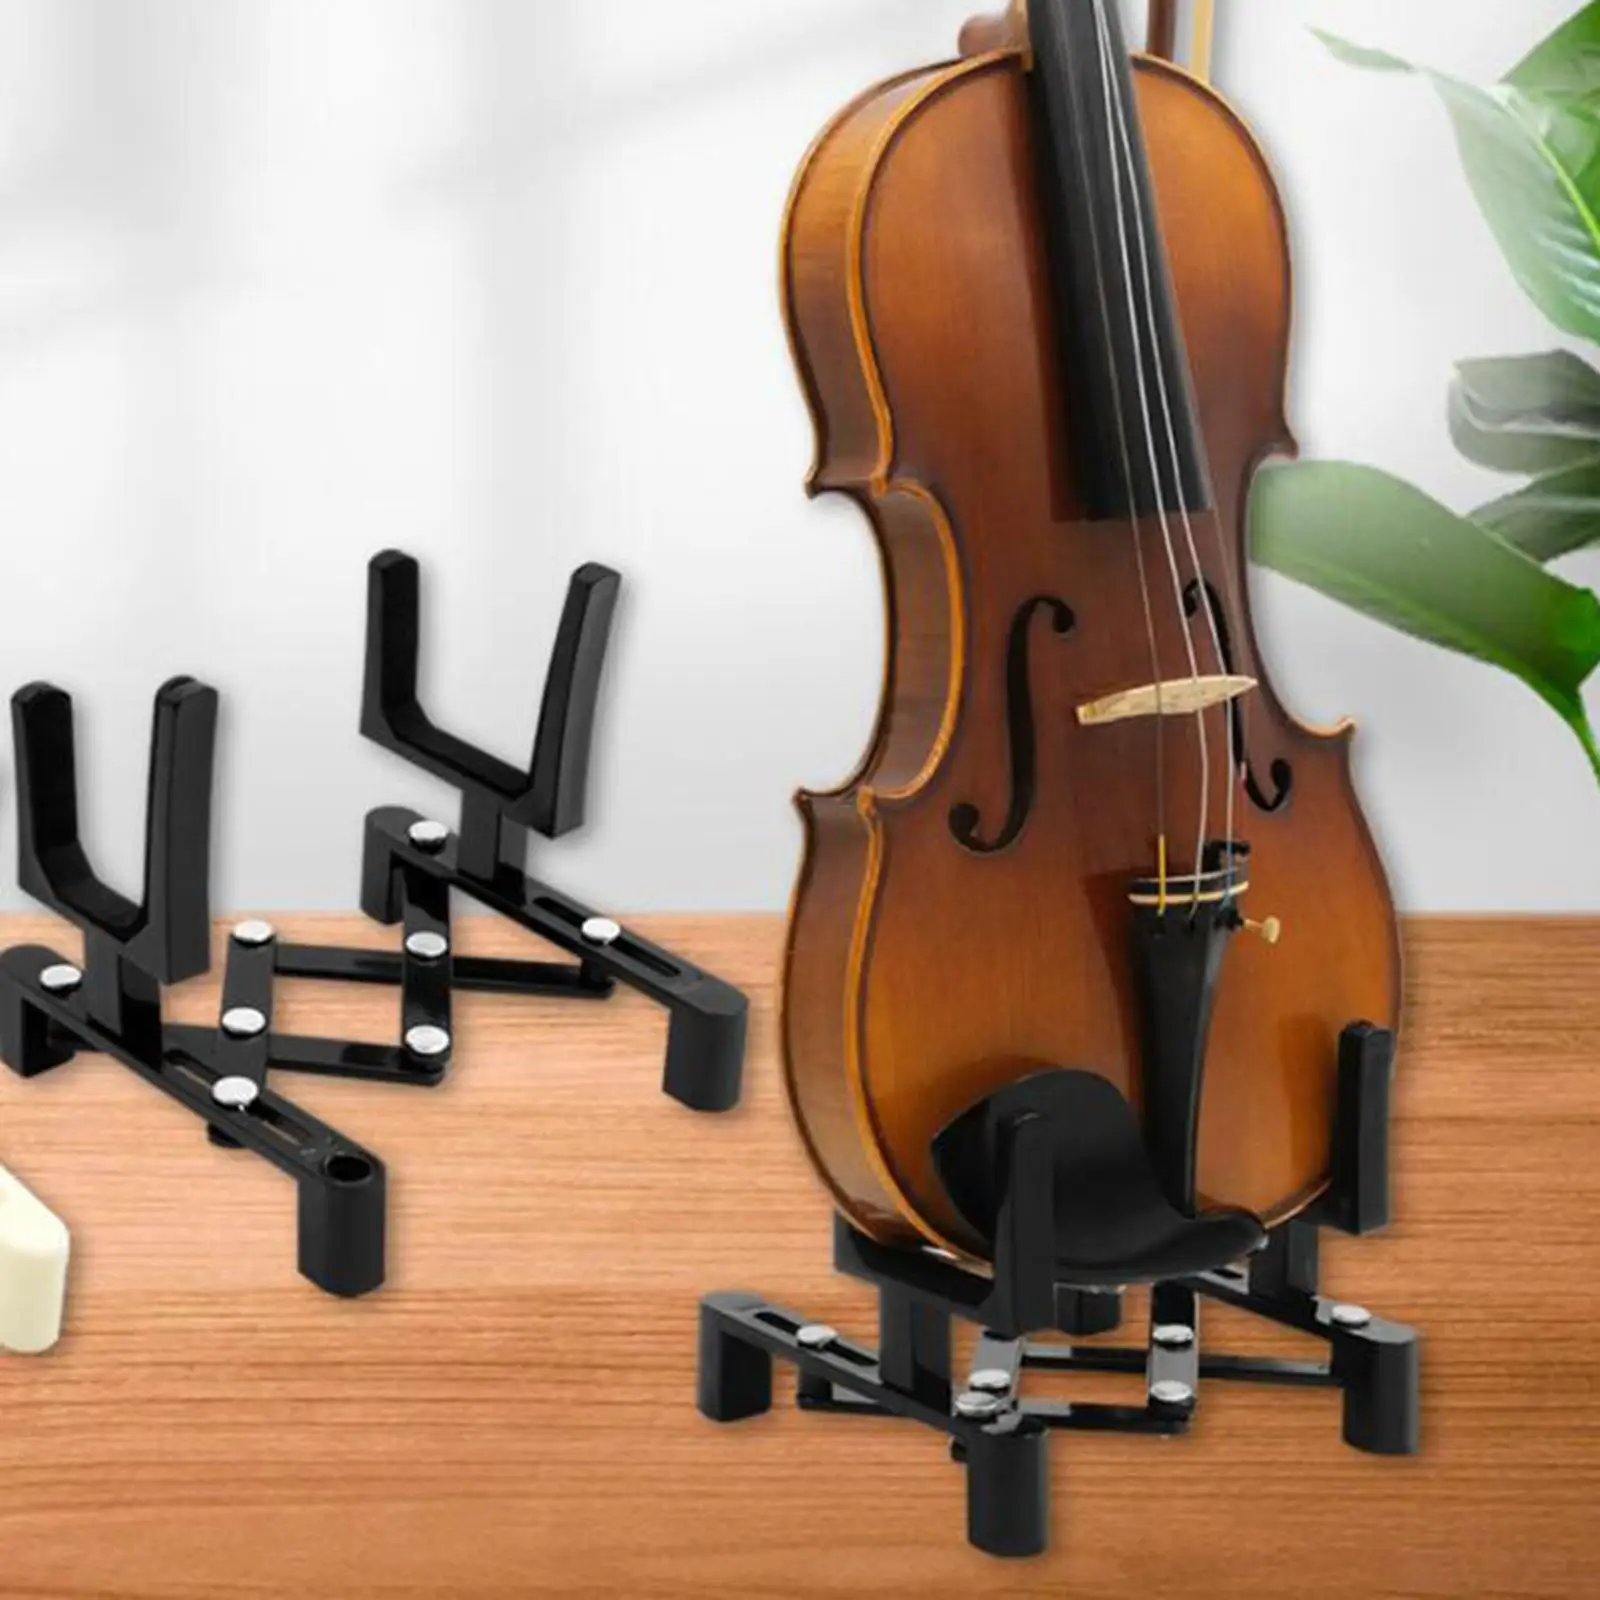 Violin Holder Violin Rest Bracket Violin Stand Frame Anti Slip Portable EVA Soft Padded for Any Size Violin Accessories Concert